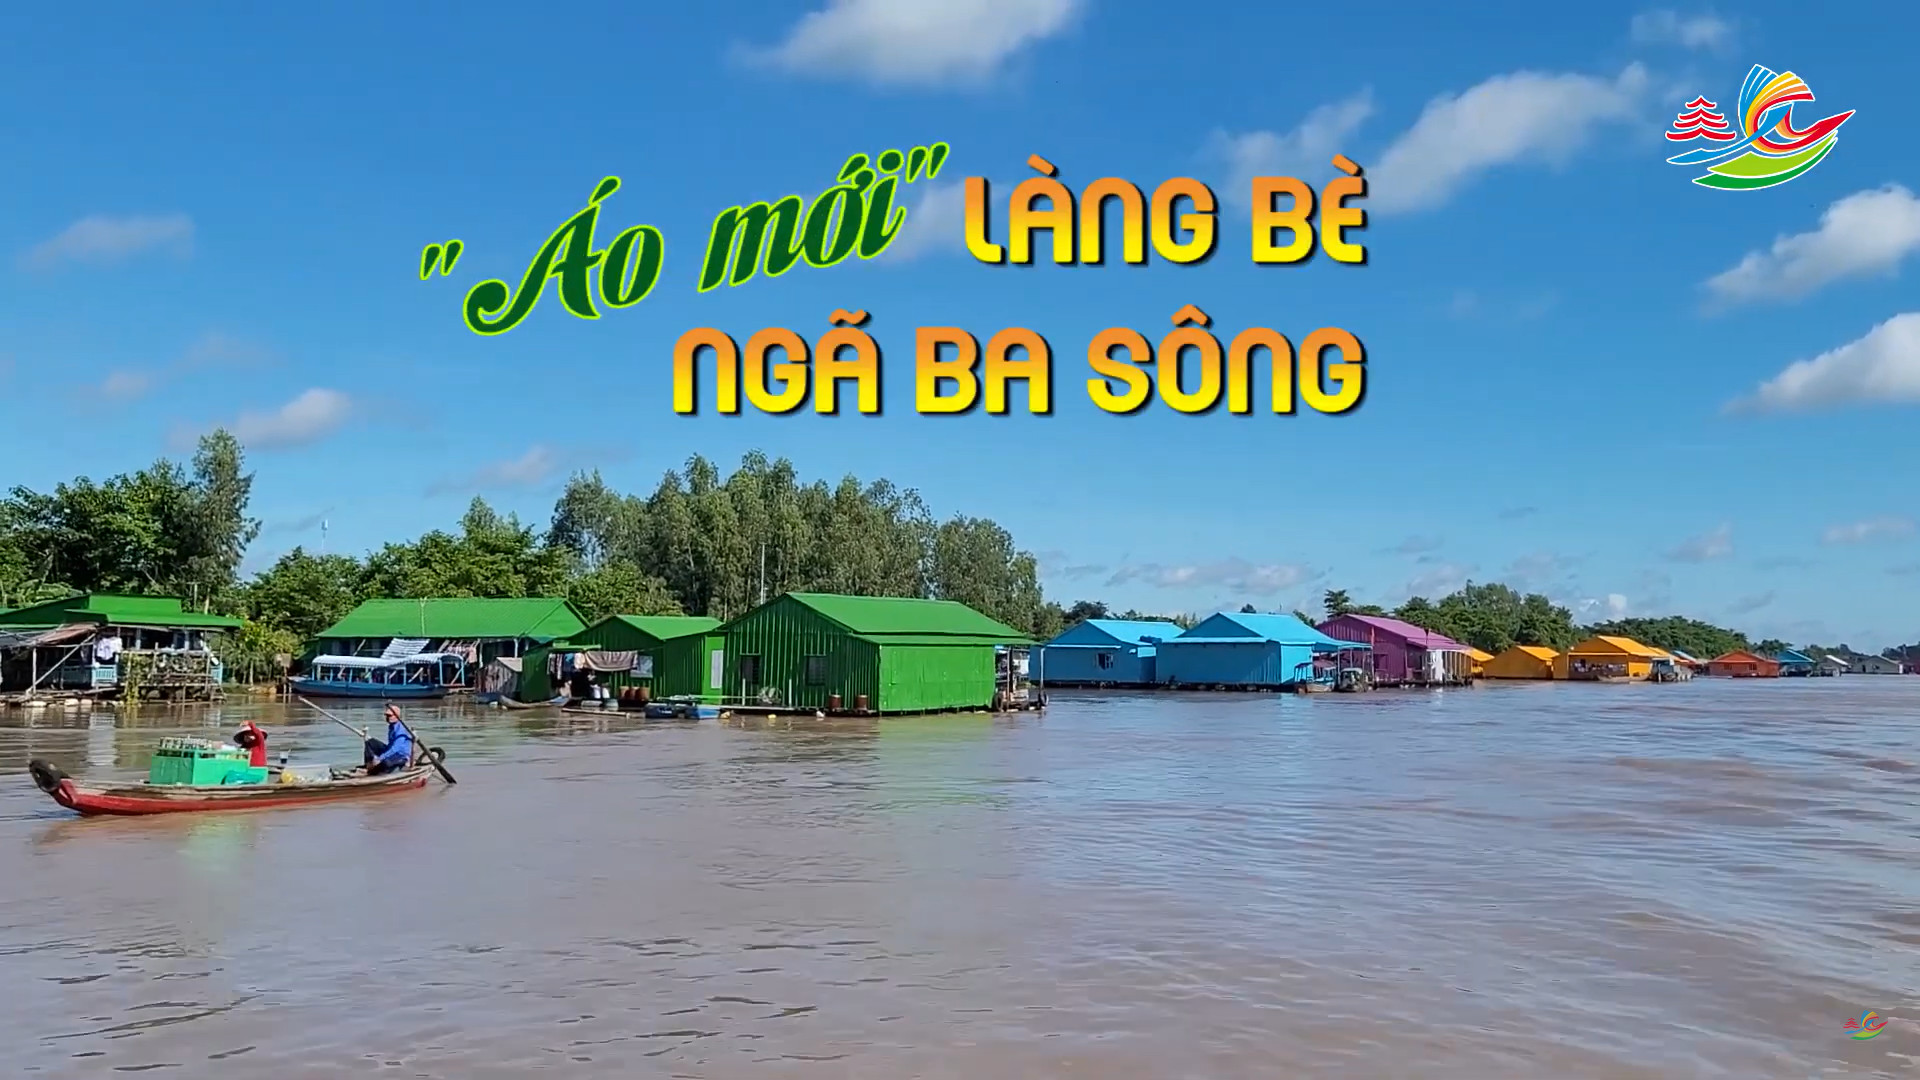 CHECK IN AN GIANG: "New shirt" rafting village at three rivers